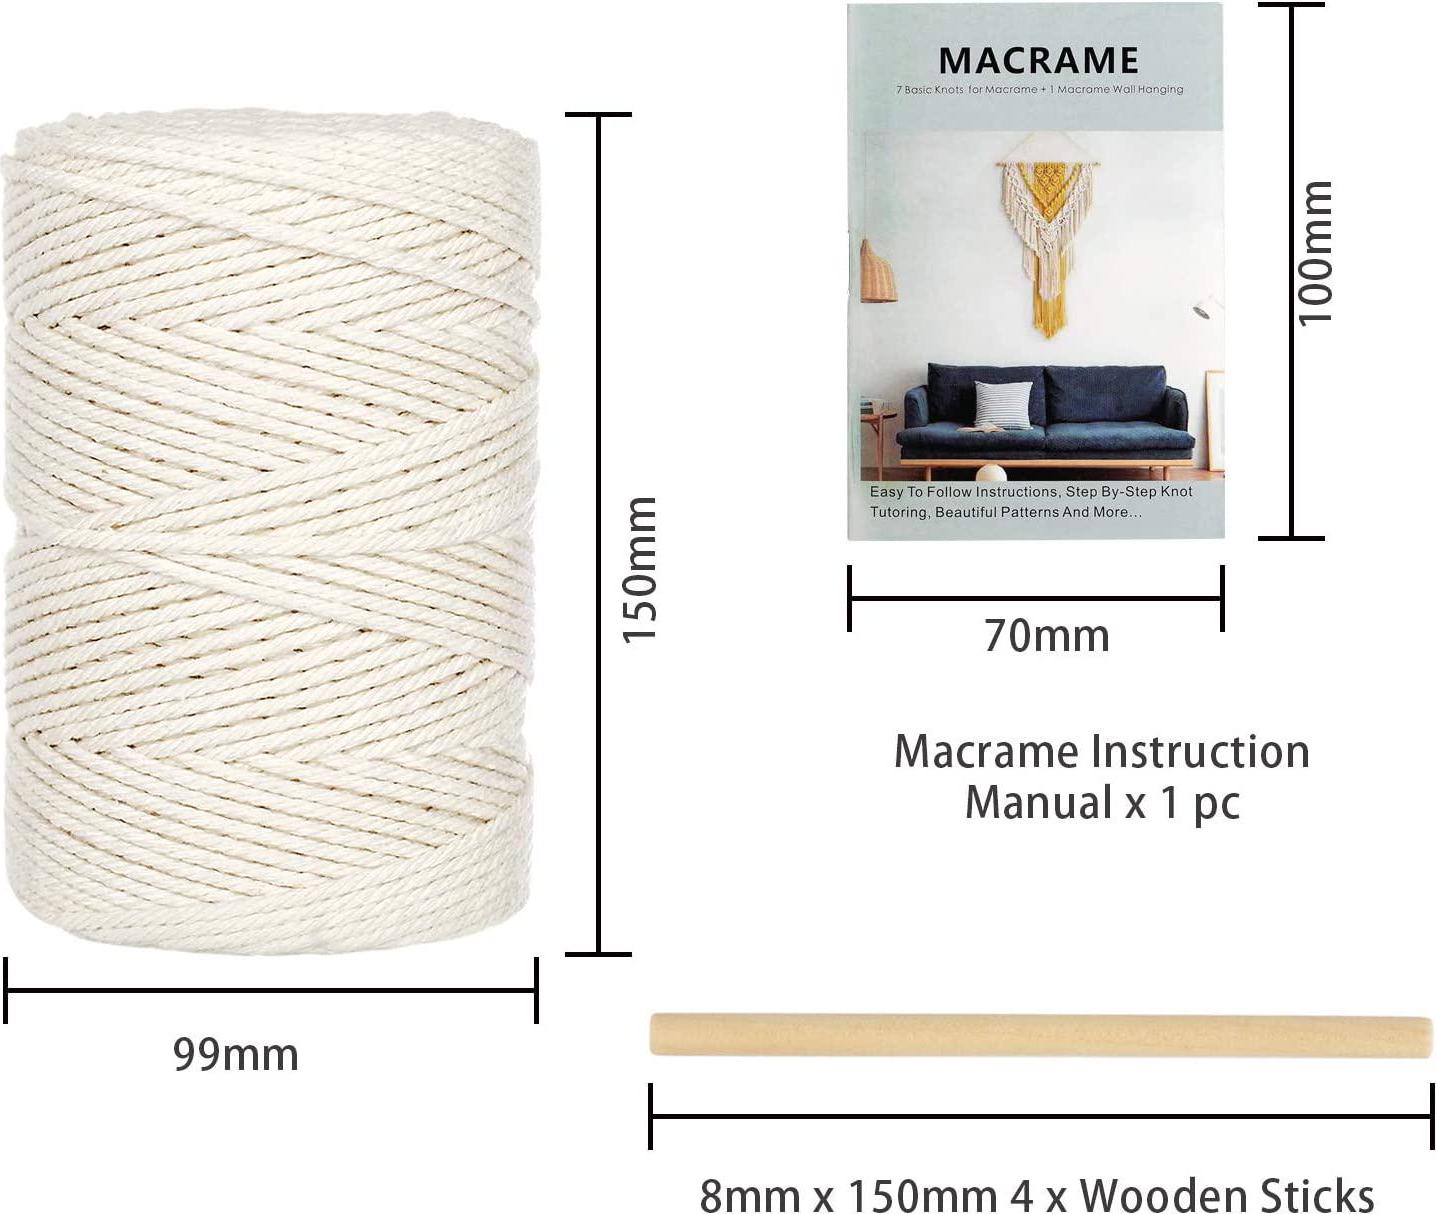 VideMundi, Macrame Kit,132 Pcs 3mm x 219 Yard Natural Cotton Cord with Wooden Sticks,Hoops Rings,Colored Bead, Book,Macrame DIY Kit for Beginners,Adults,Kids